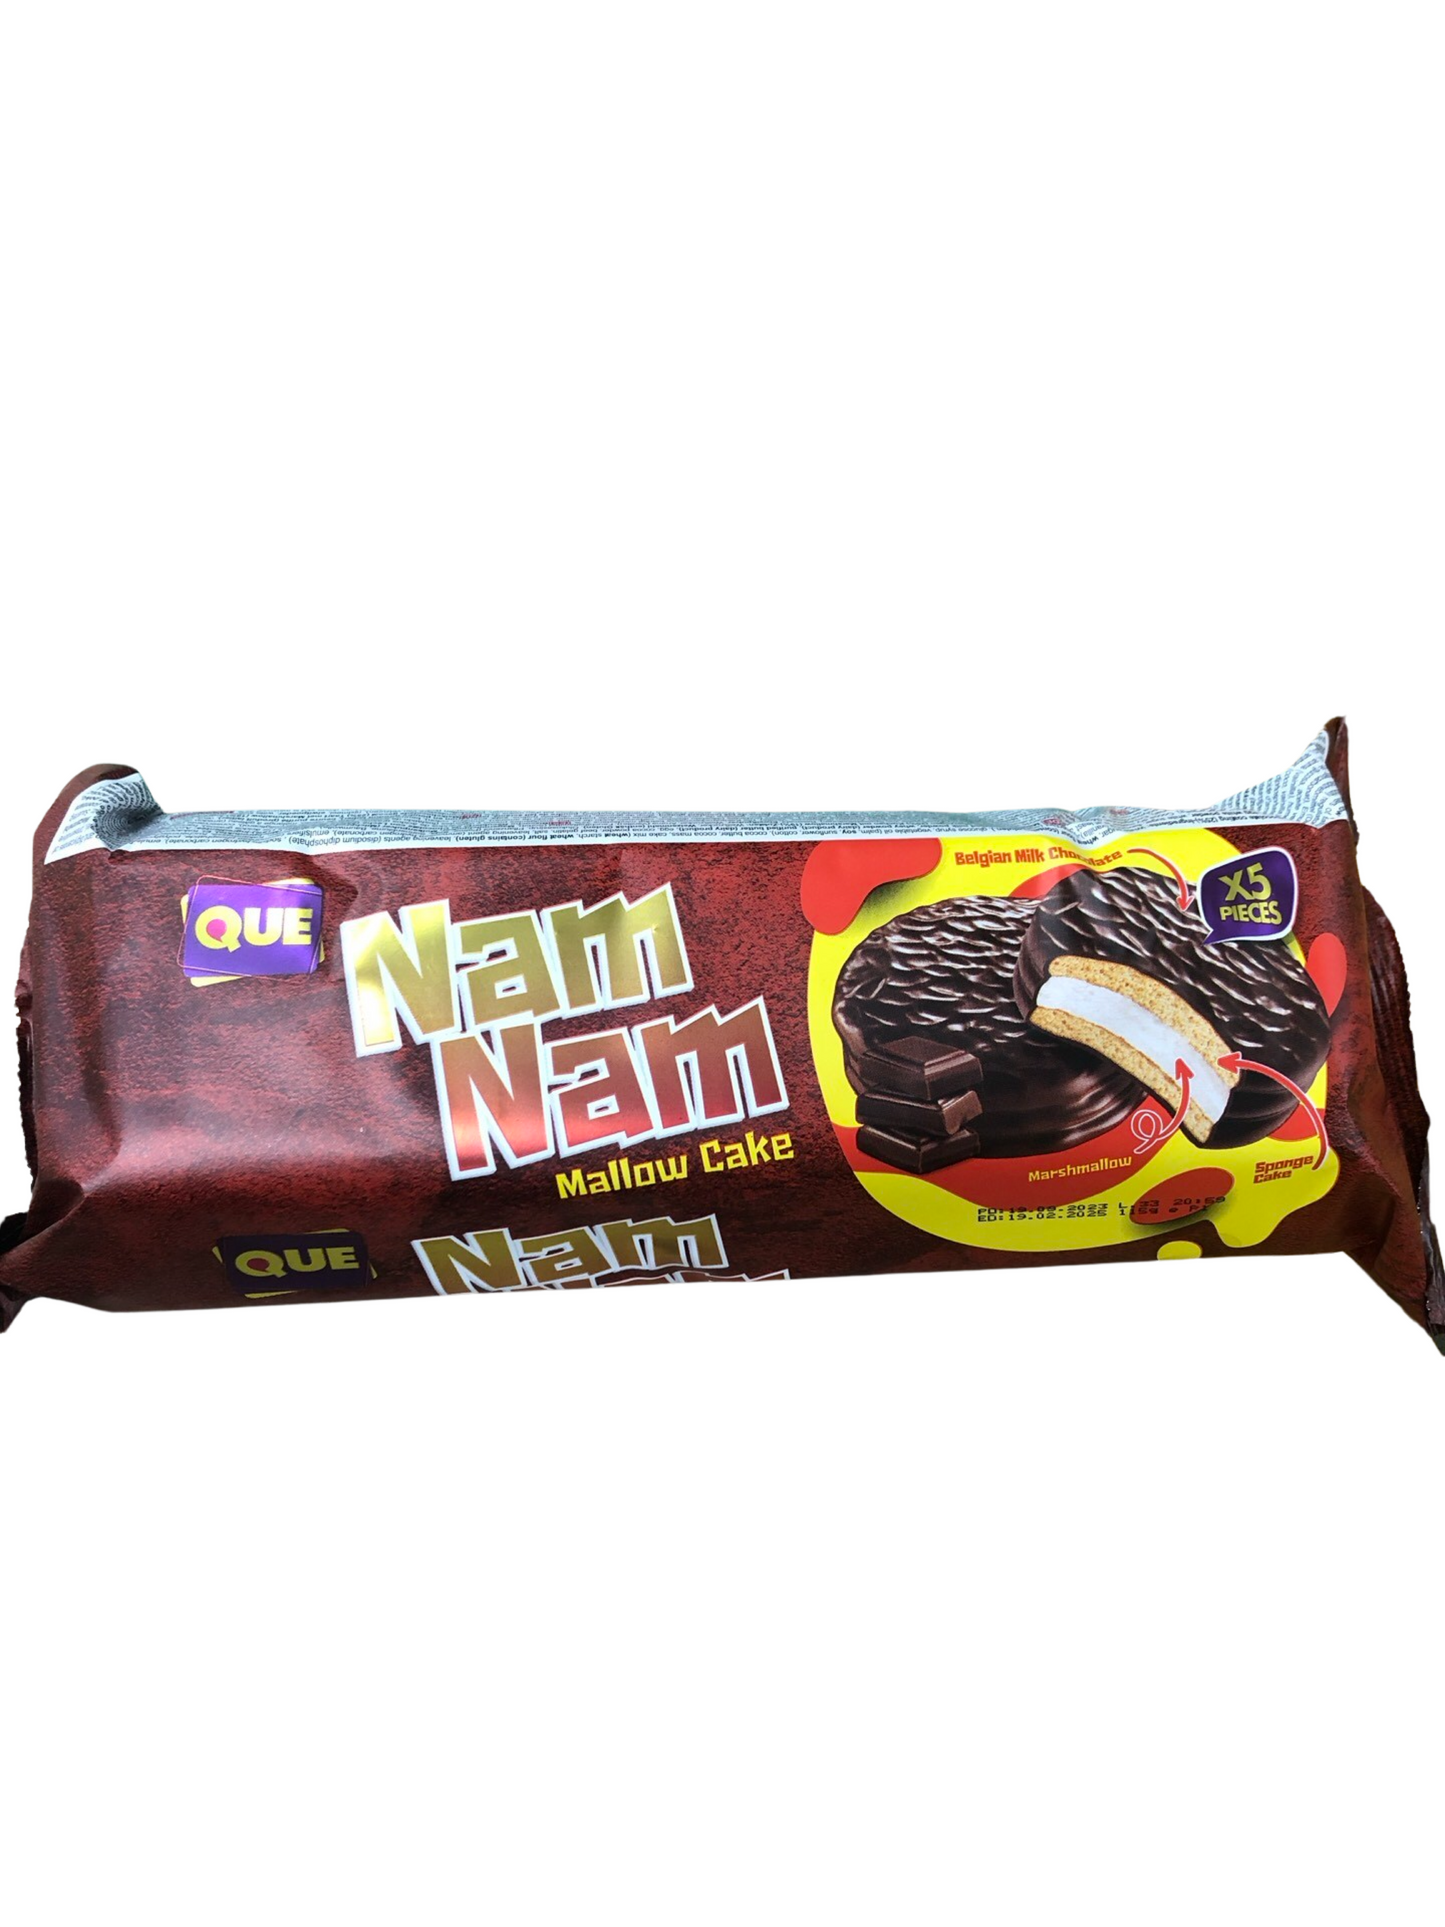 Nam Nam mallow cake